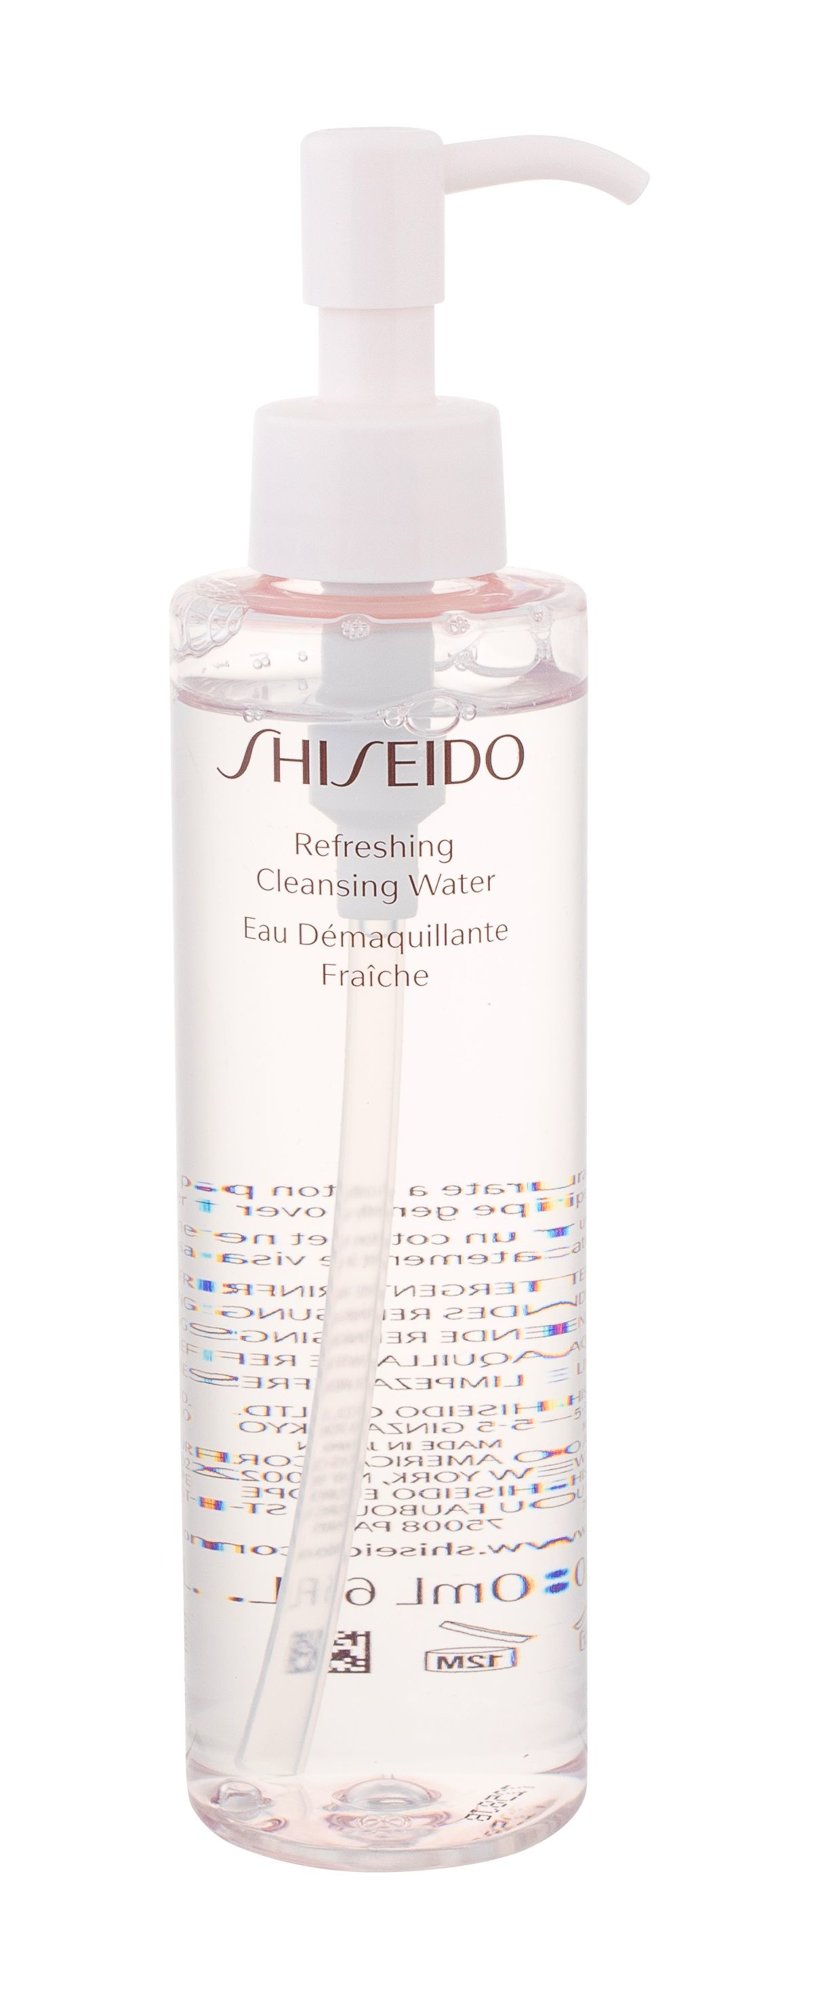 Shiseido Refreshing Cleansing Water valomasis vanduo veidui